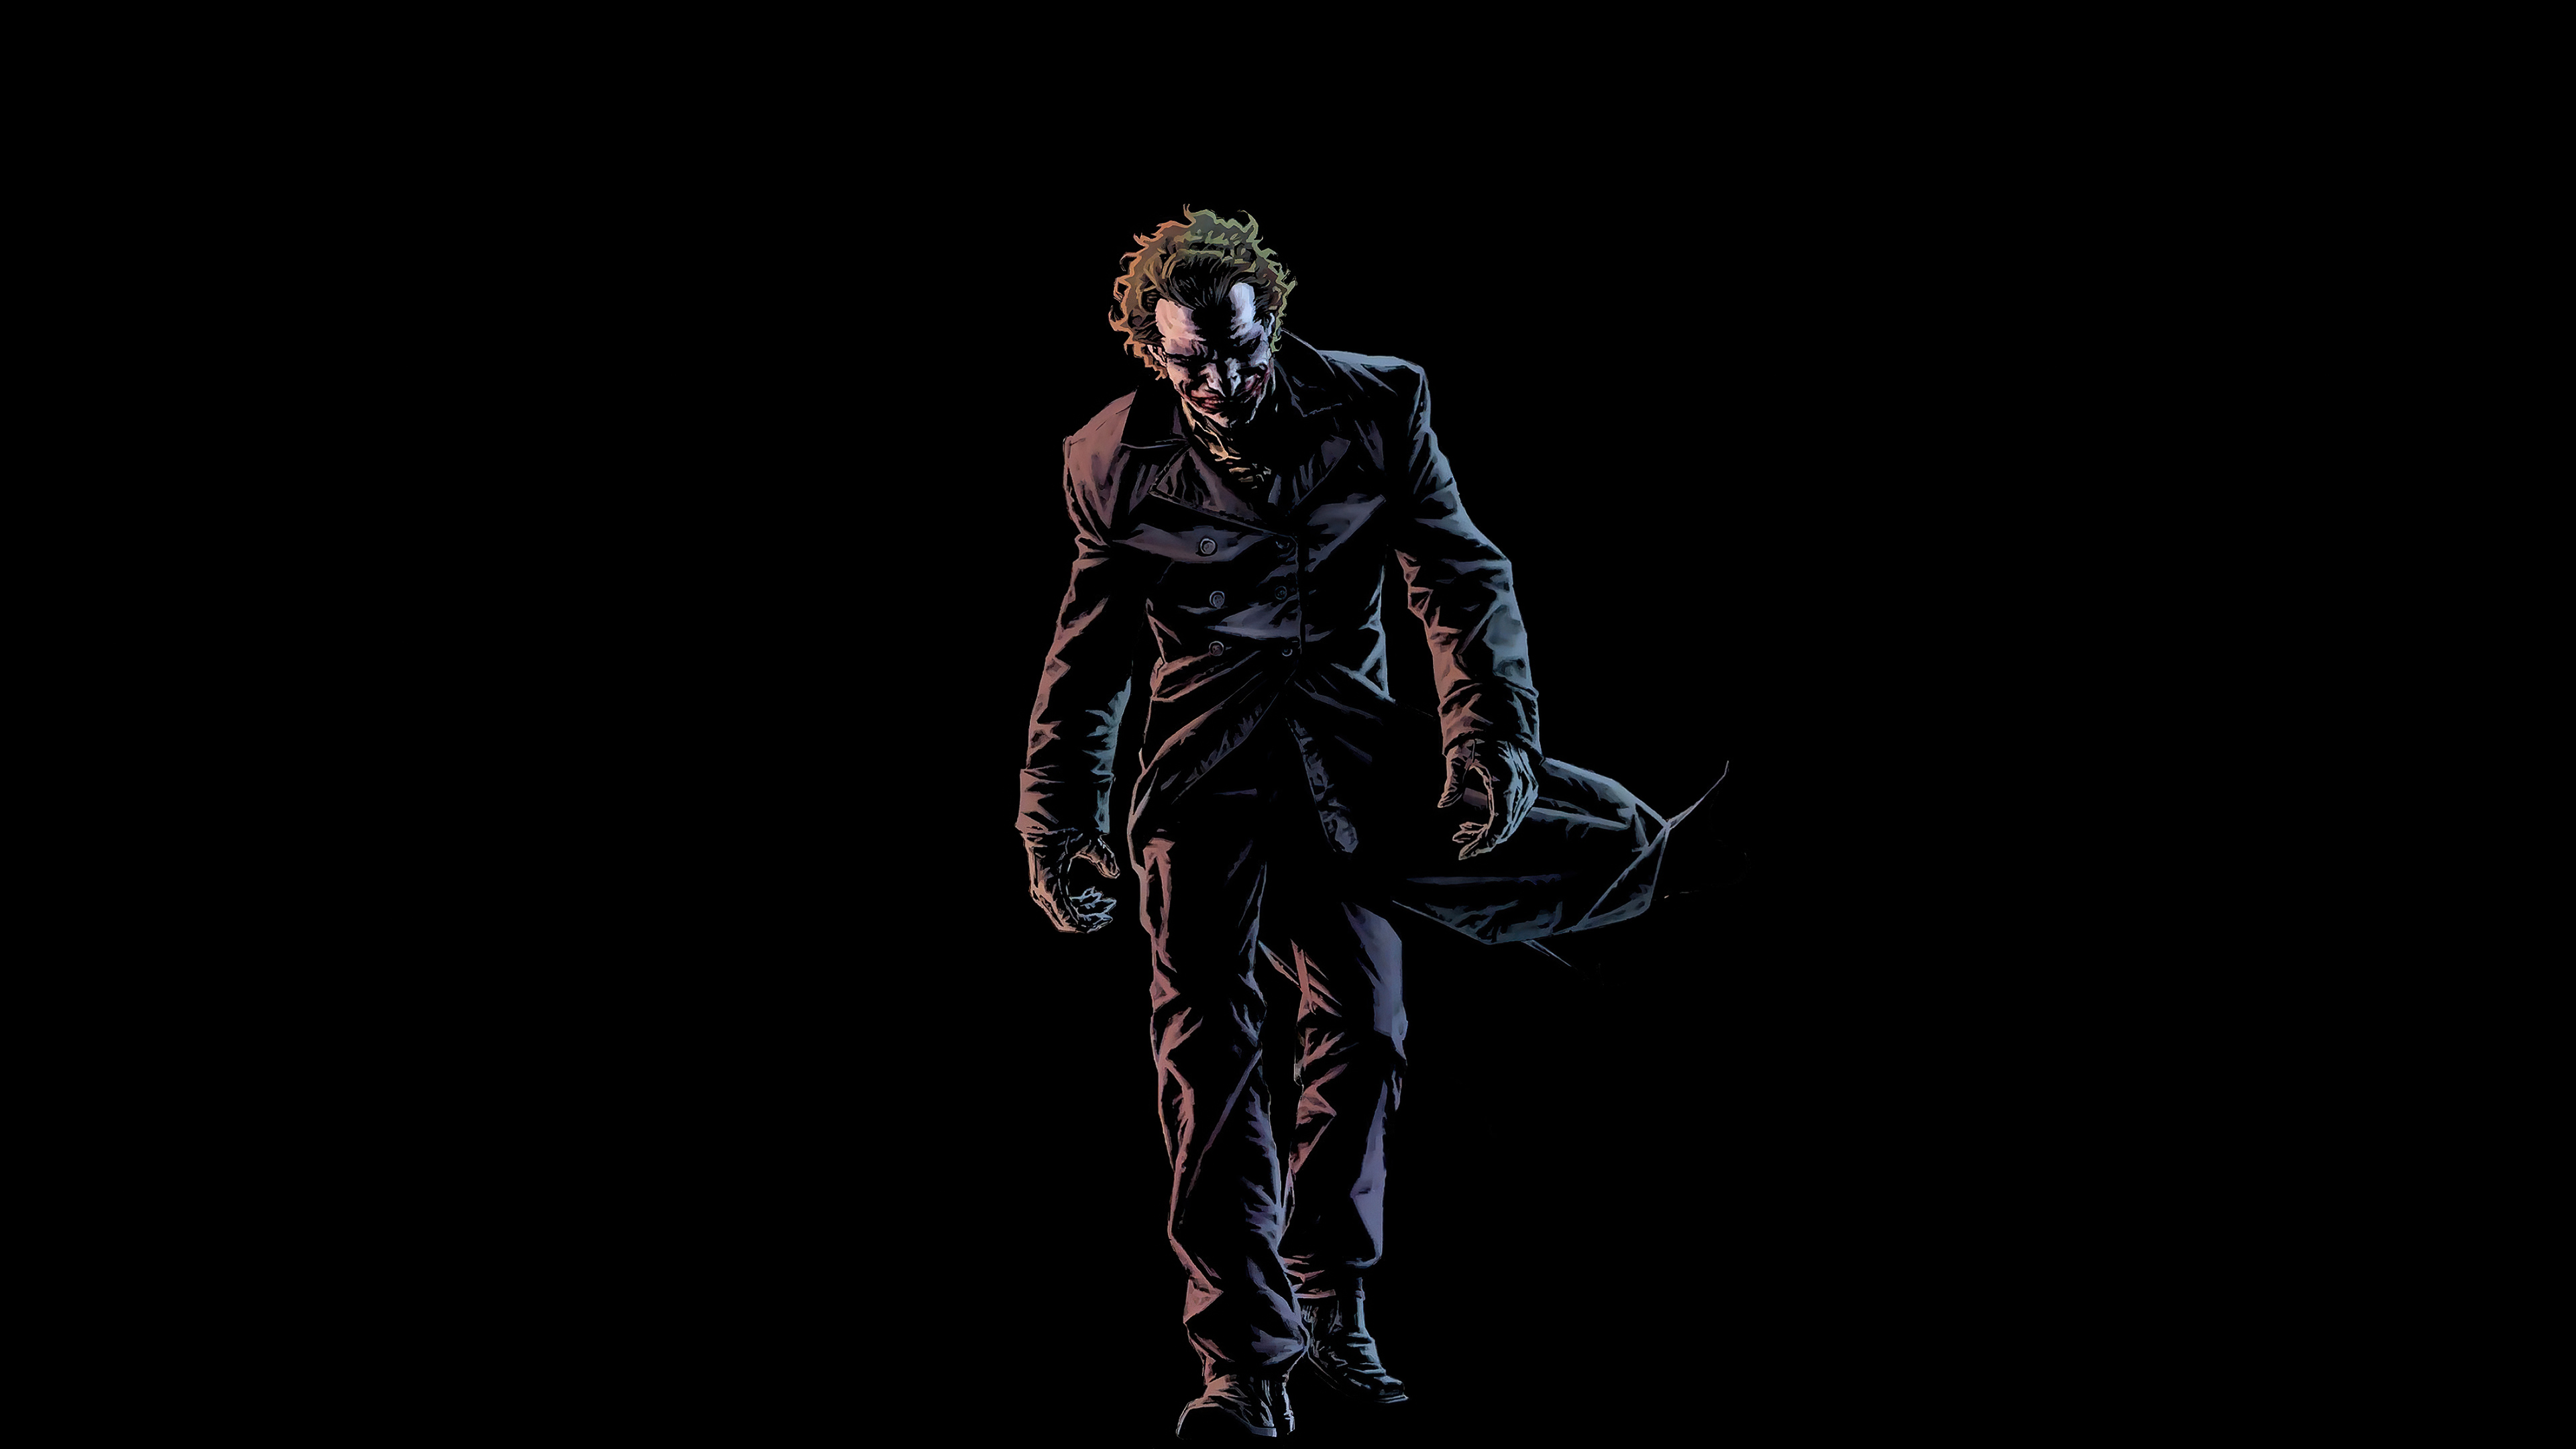 Joker Walking In Dark 4k, HD Superheroes, 4k Wallpapers, Images, Backgrounds,  Photos and Pictures